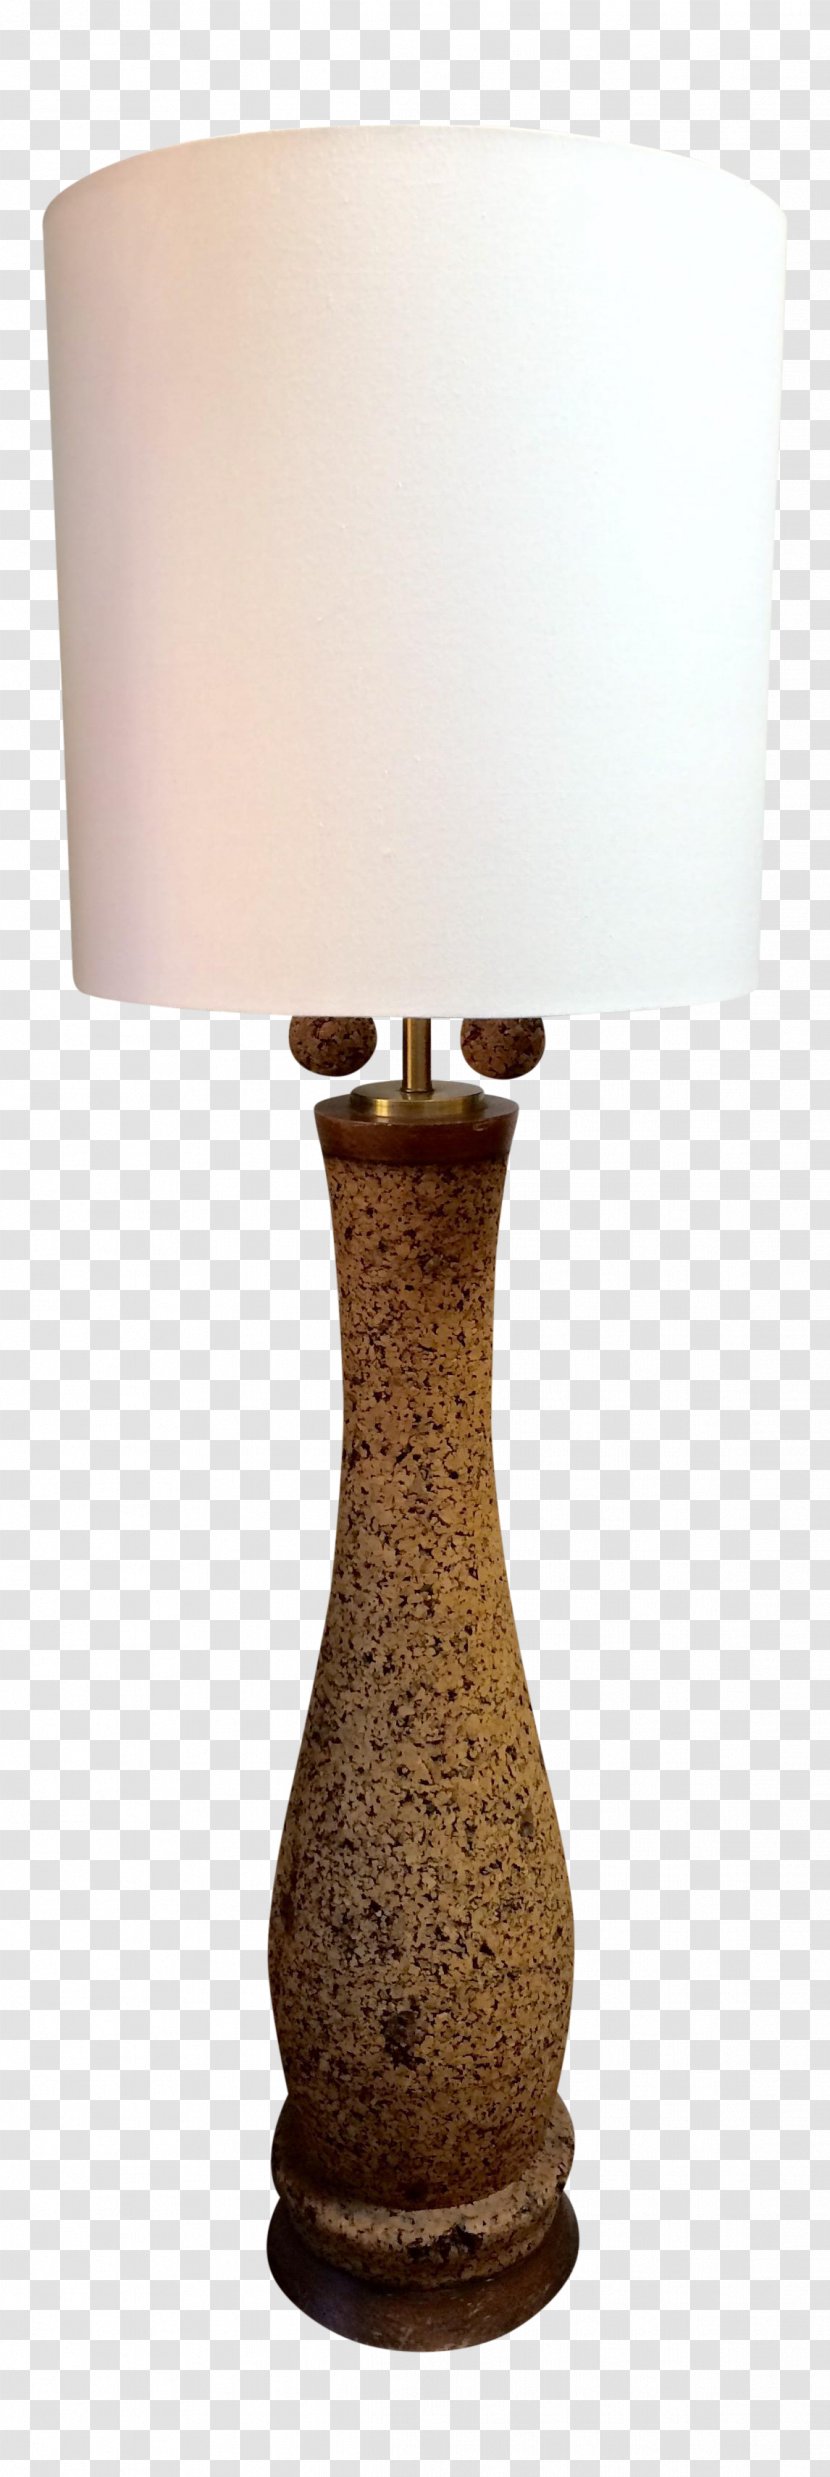 Cork Floor Bottle Chairish Incandescent Light Bulb - Midcentury Modern Transparent PNG